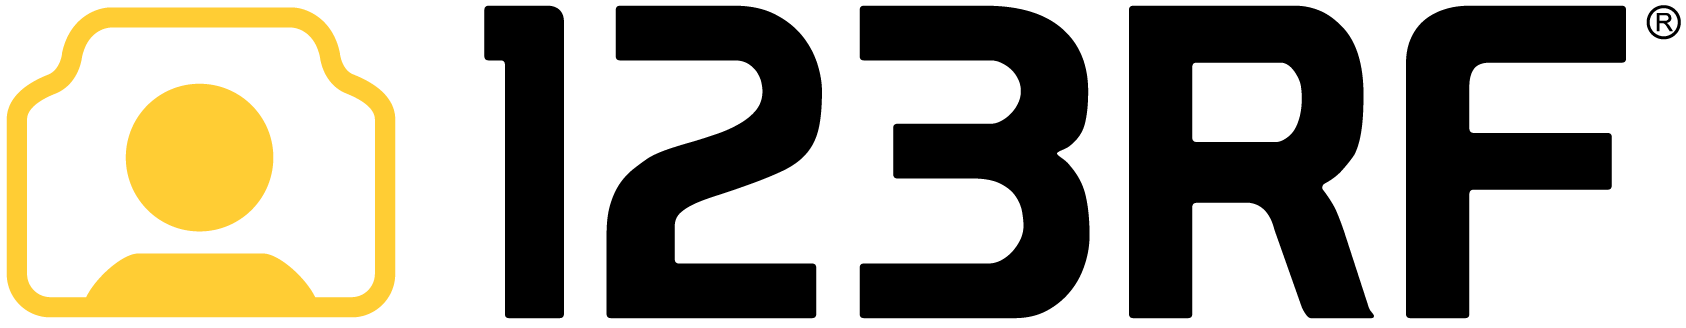 186-123rf-logo.png